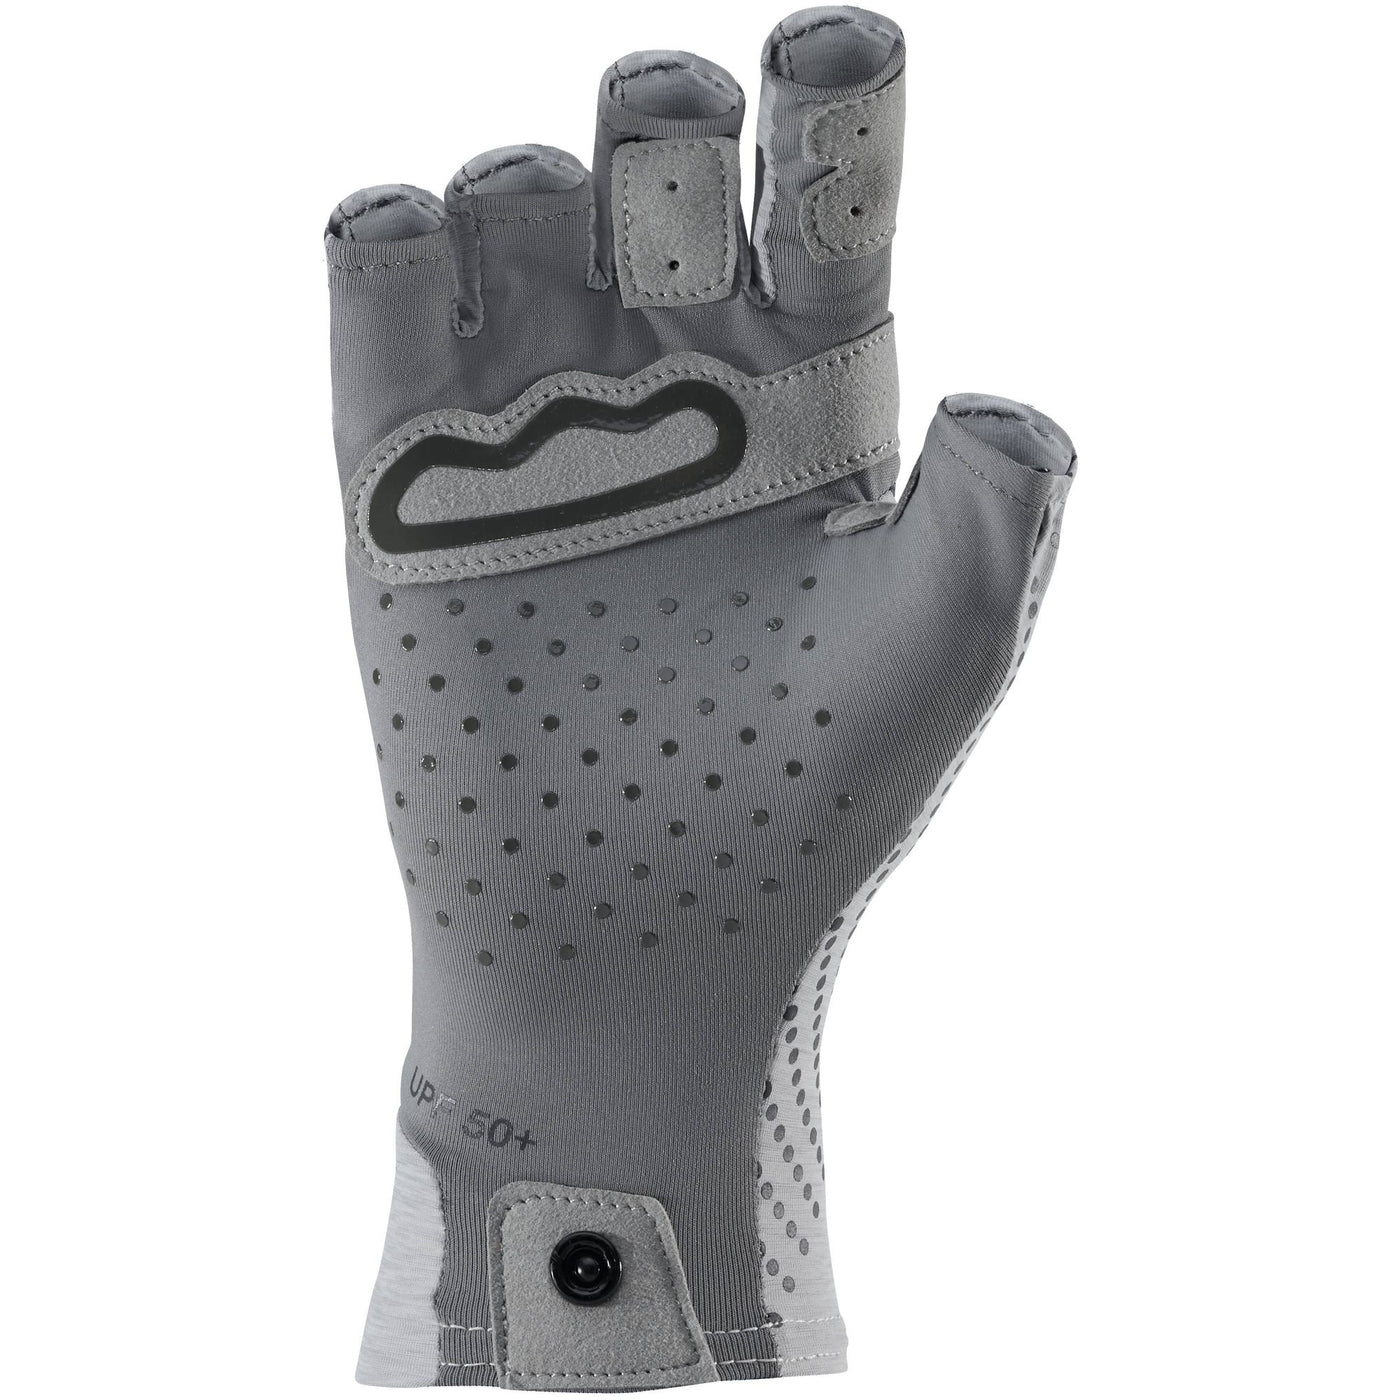 NRS Skelton Gloves (clearance)